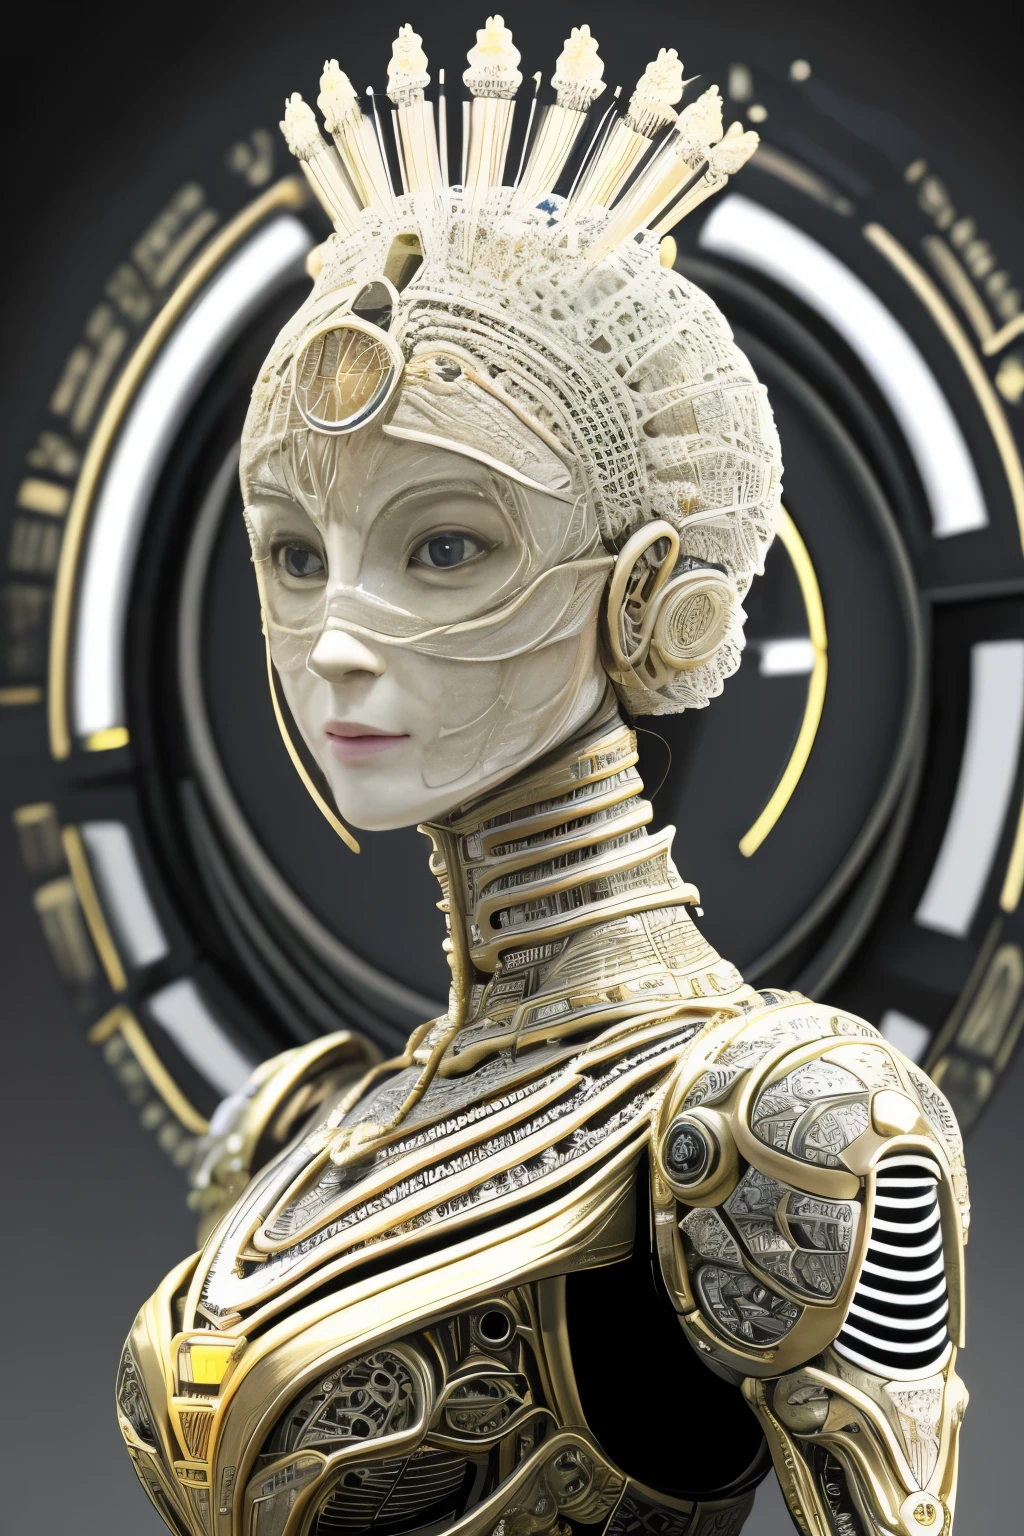 Intricate 3d rendering of highly detailed beautiful ceramic silhouette female 로봇 face, 사이보그, 로봇 parts, 150mm, 아름다운 스튜디오 부드러운 조명, 후프 라이트, 생동감 넘치는 디테일, 럭셔리 사이버펑크, 소득, 초현실적, 해부 , 안면 근육, 케이블 와이어, 마이크로칩, 우아, 아름다운 배경, 옥탄 렌더링, HR 기거 스타일, 8K, 더 나은 품질, 삽화, 삽화, 매우 섬세하고 아름답습니다., 매우 상세한, CG, 제복, 벽지, ( 충실도, 충실도: 1.37), 화려한, 미세한 디테일, 삽화, 더 나은 품질, 공식 예술, Papel de parede CG Unity 8K 매우 상세한, 터무니없는, Inacreditavelmente 터무니없는o, 로봇, 은색 헬멧, 전신, 앉아서 글을 쓰다